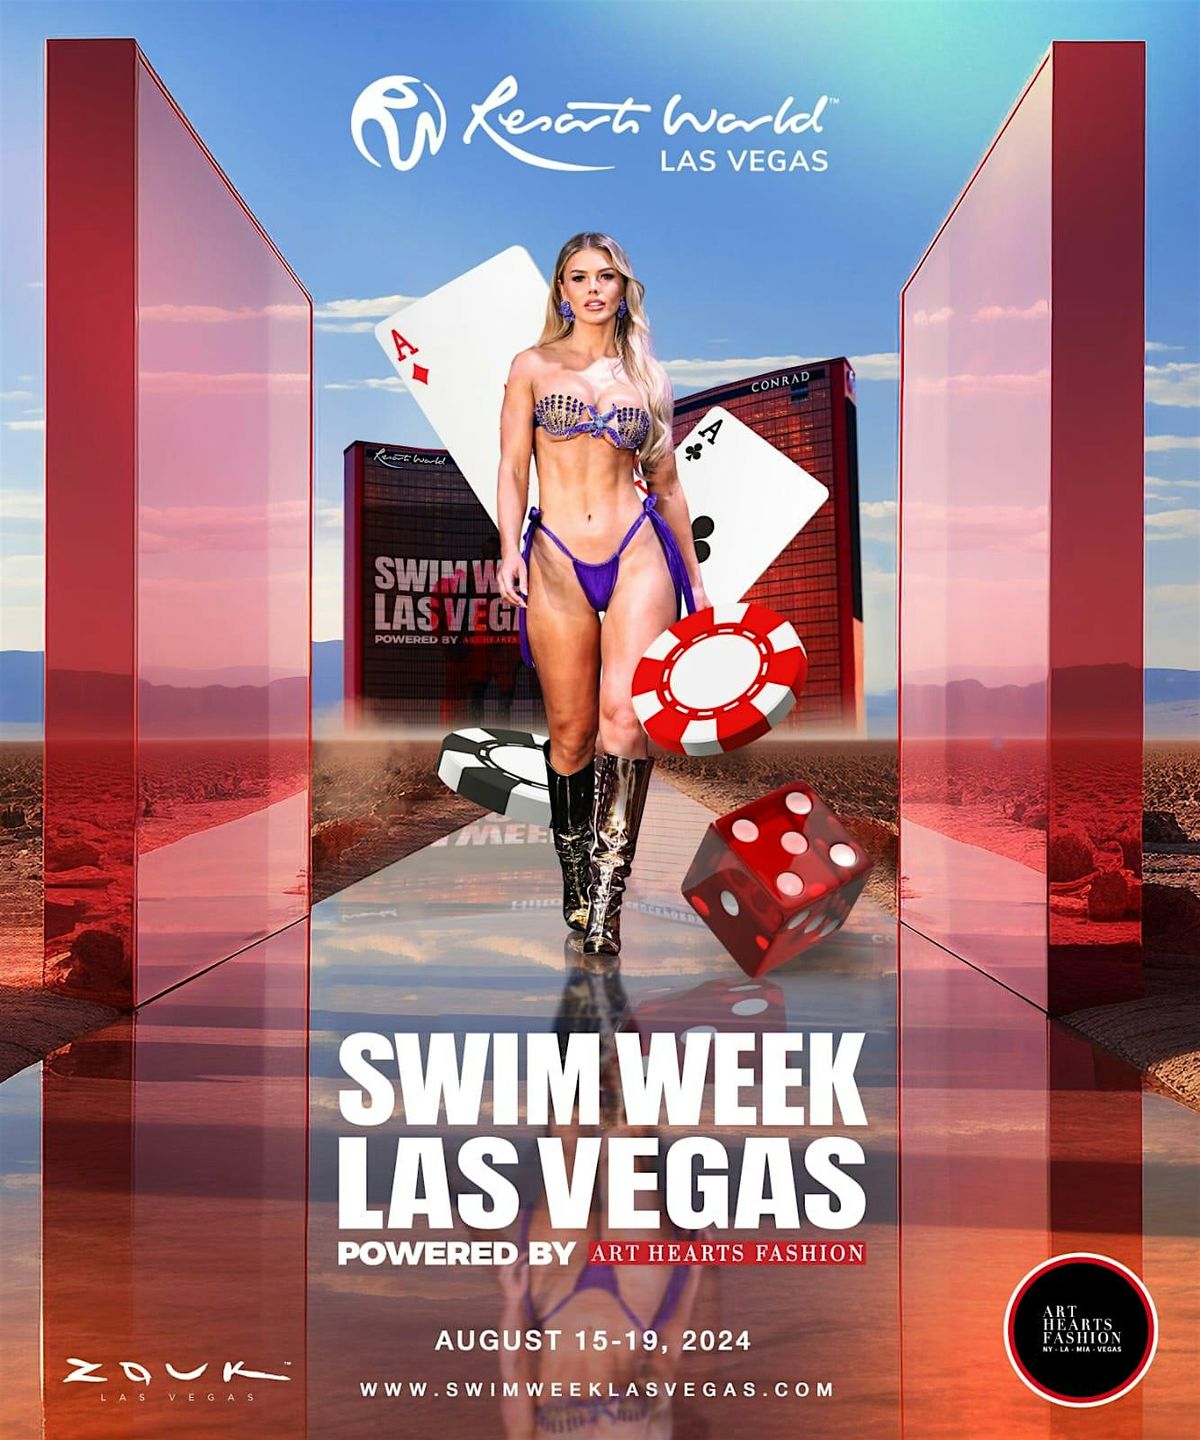 Swim Week Las Vegas Powered by Art Hearts Fashion @ Resorts World 8.15-19th